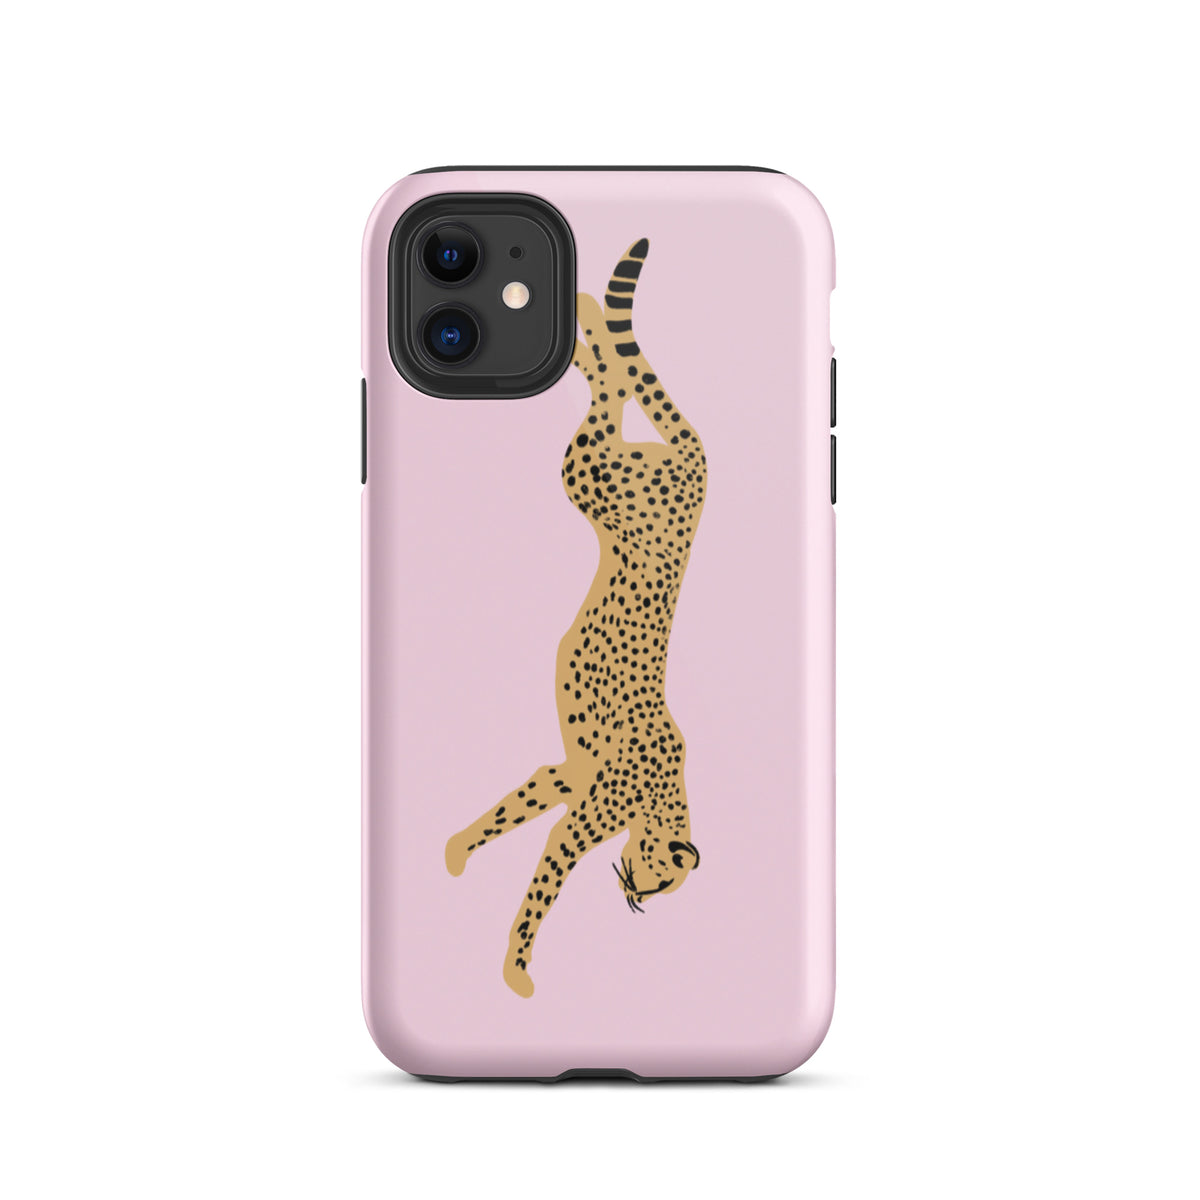 Iphone 11 cheetah pink phone case glossy